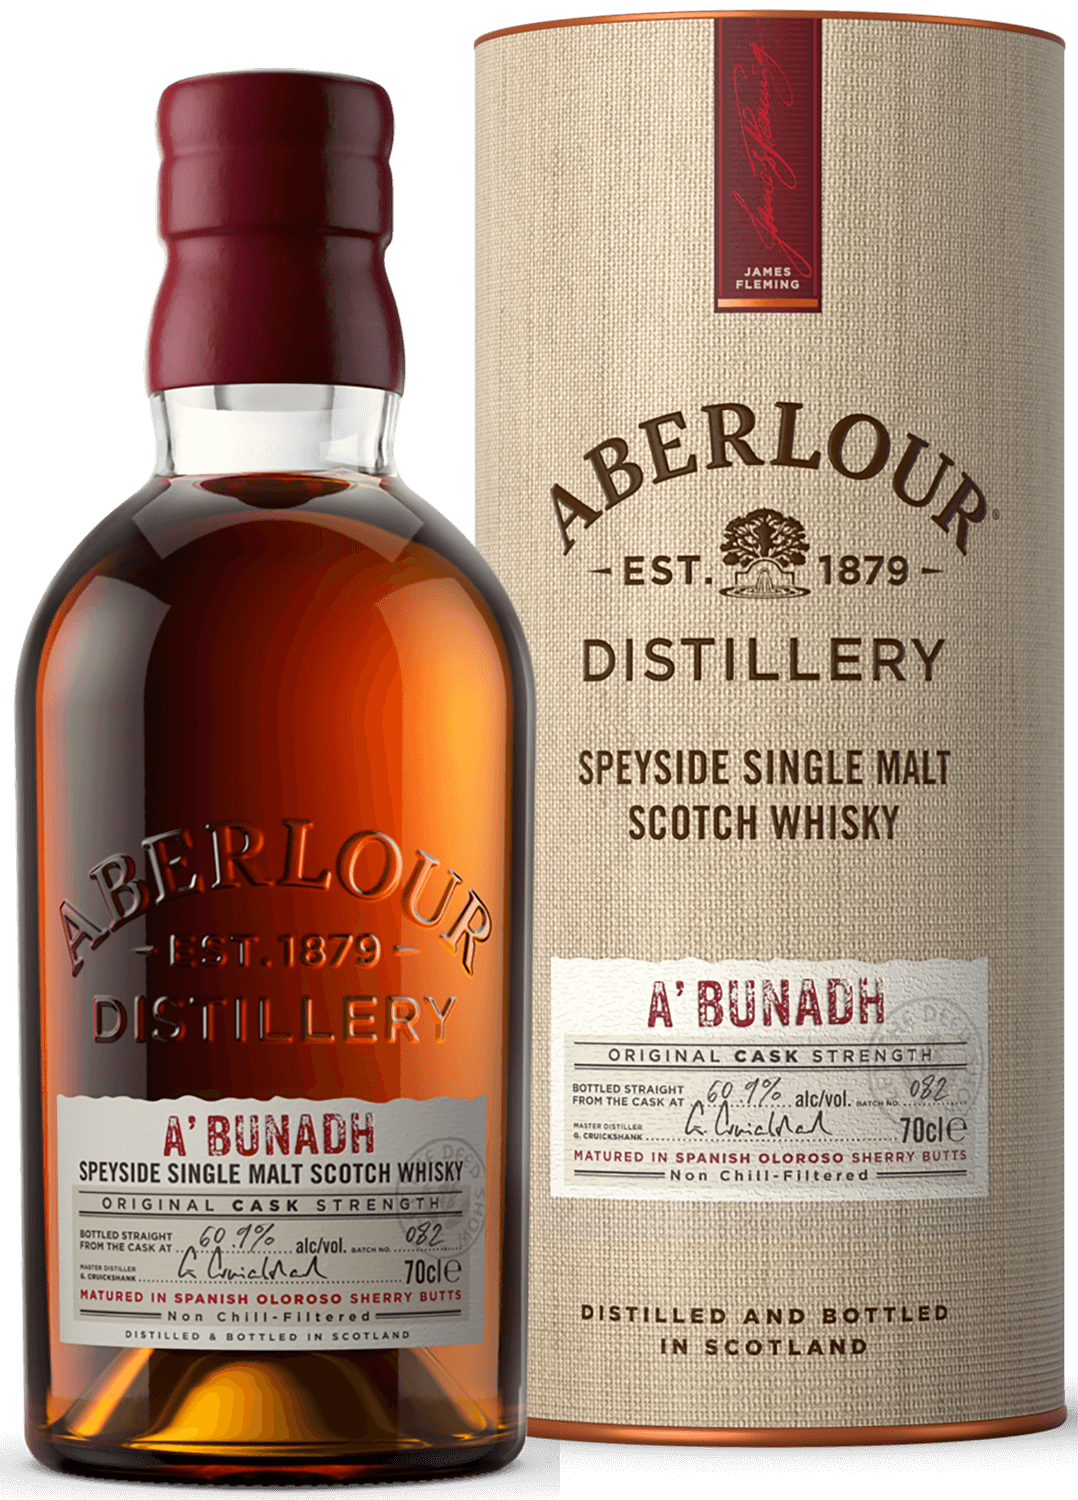 Aberlour A'bunadh Single Malt Scotch Whisky (gift box) auchentoshan american oak single malt scotch whisky gift box